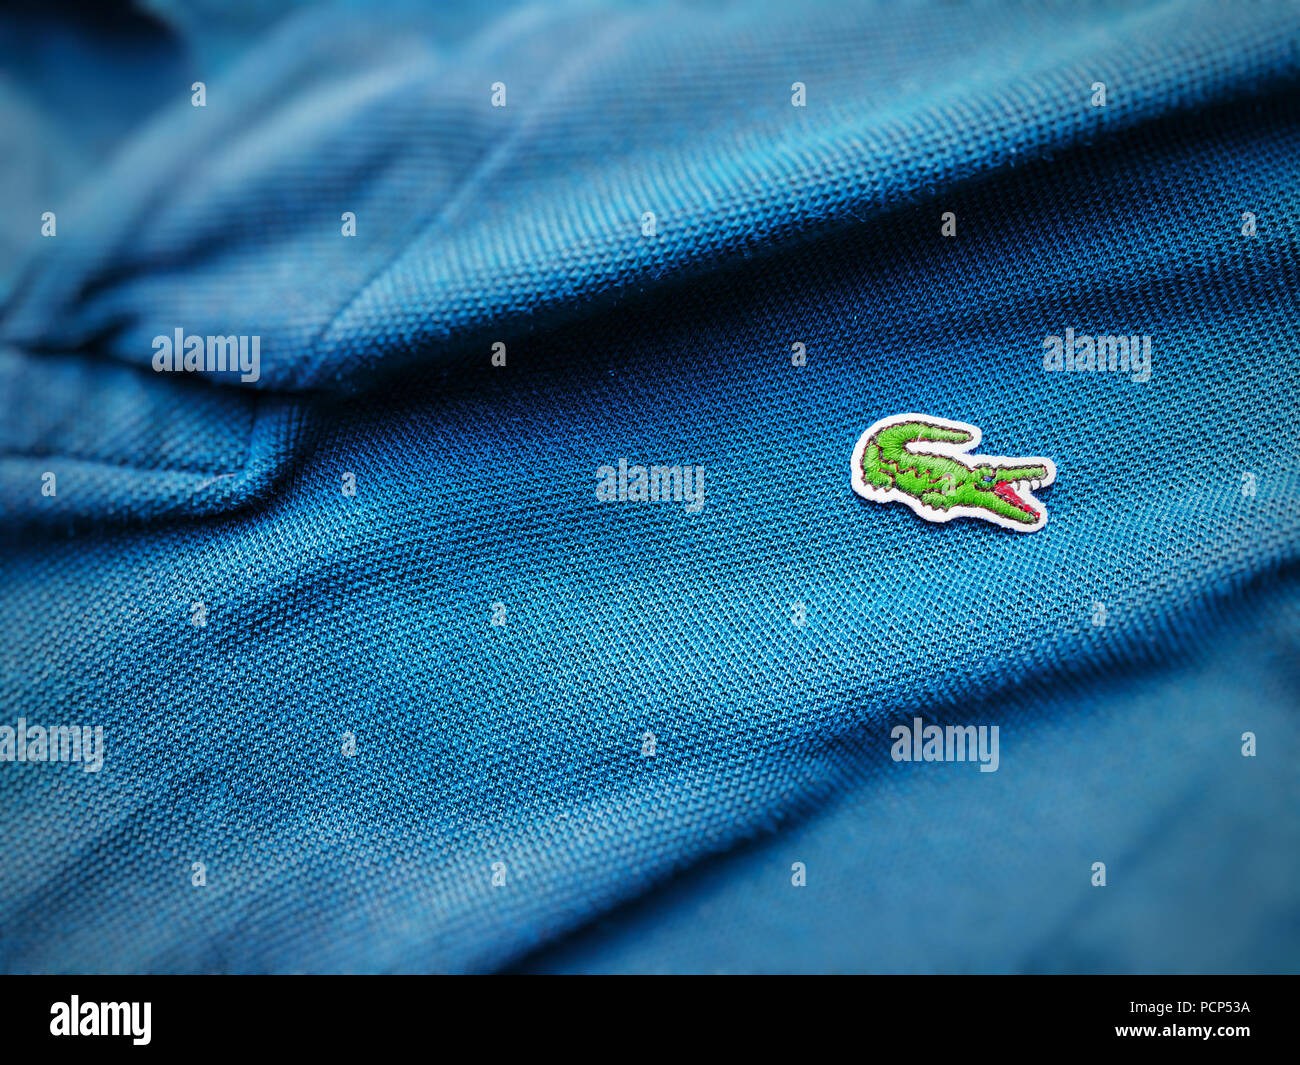 Lacoste logo-patch Polo Shirt - Blue